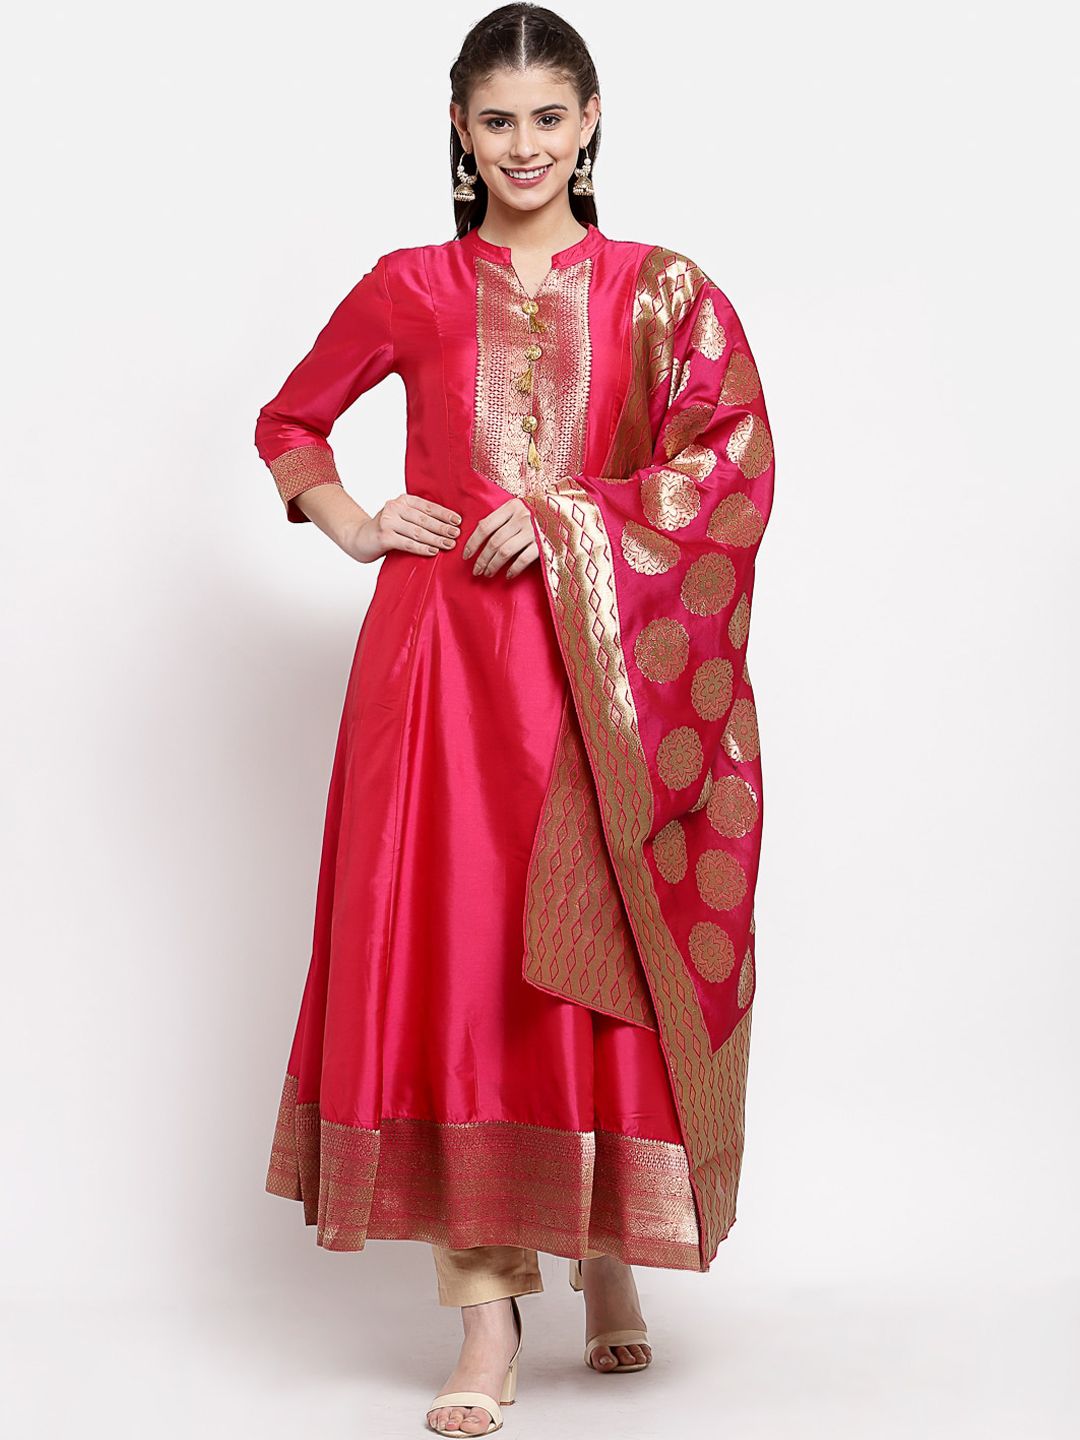 Myshka Red Ethnic Motifs Ethnic Anarkali Dress With Dupatta Price in India